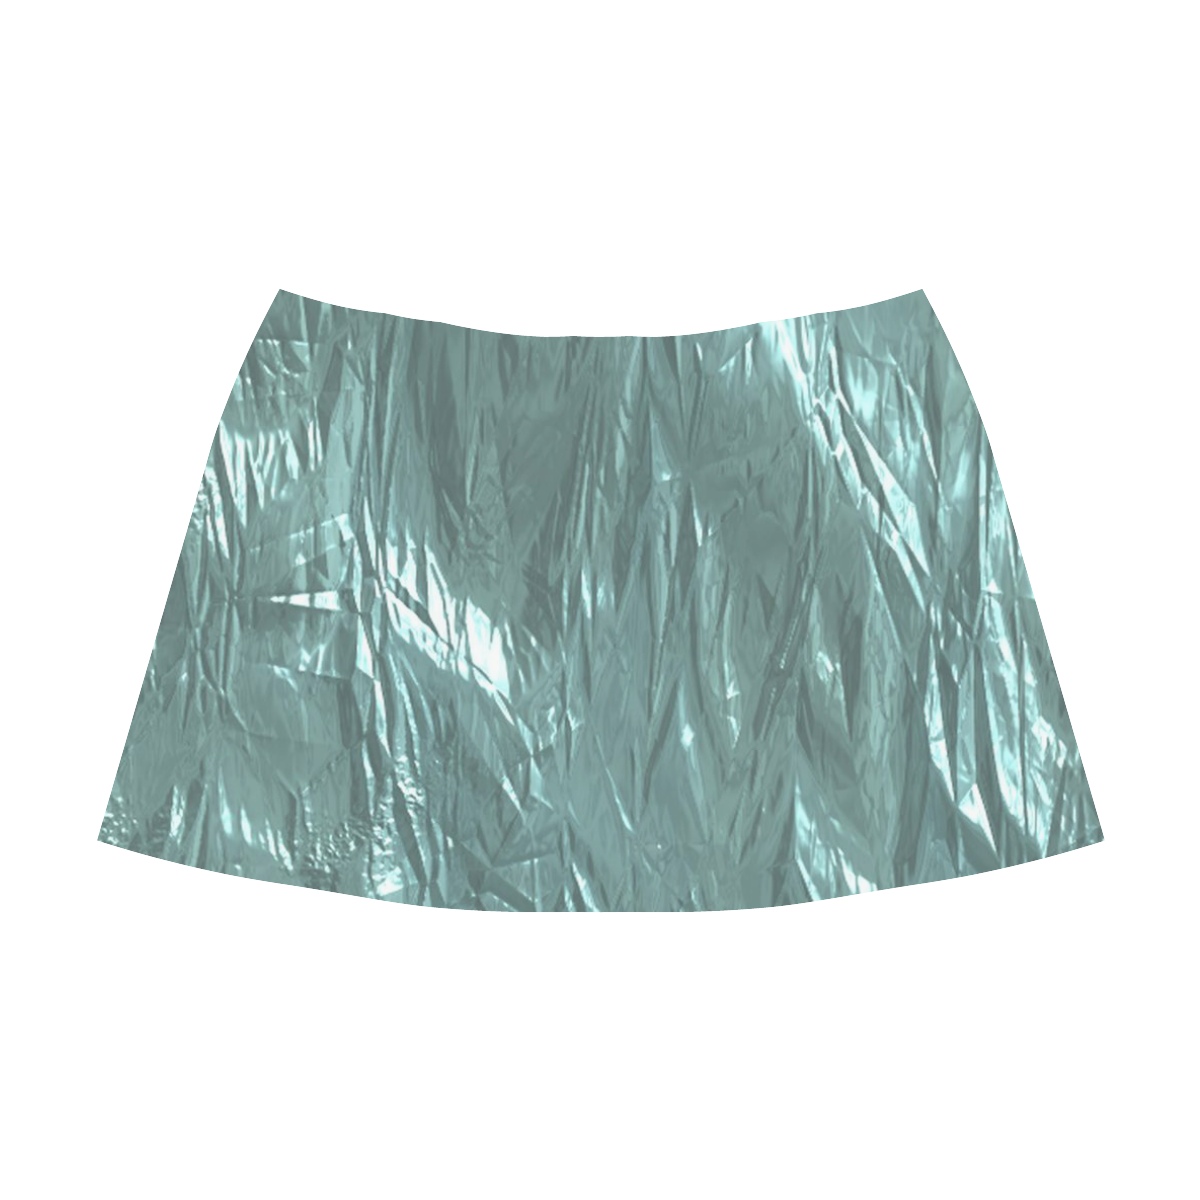 crumpled foil teal Mnemosyne Women's Crepe Skirt (Model D16)